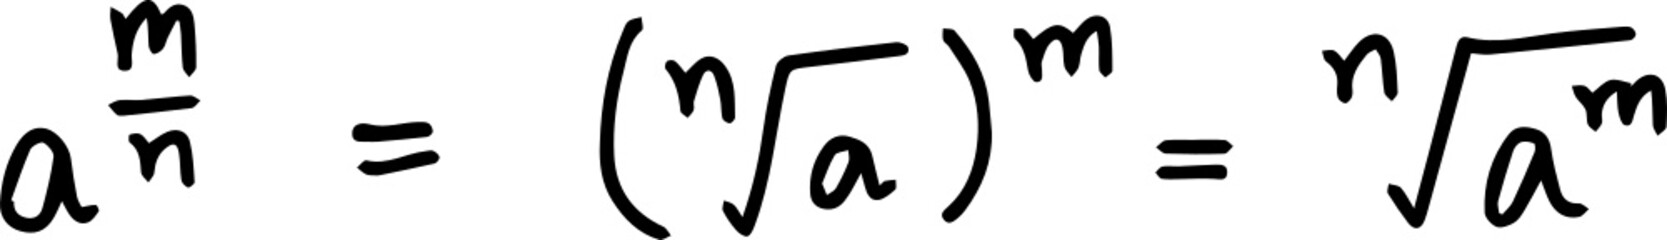 math formula handwriting